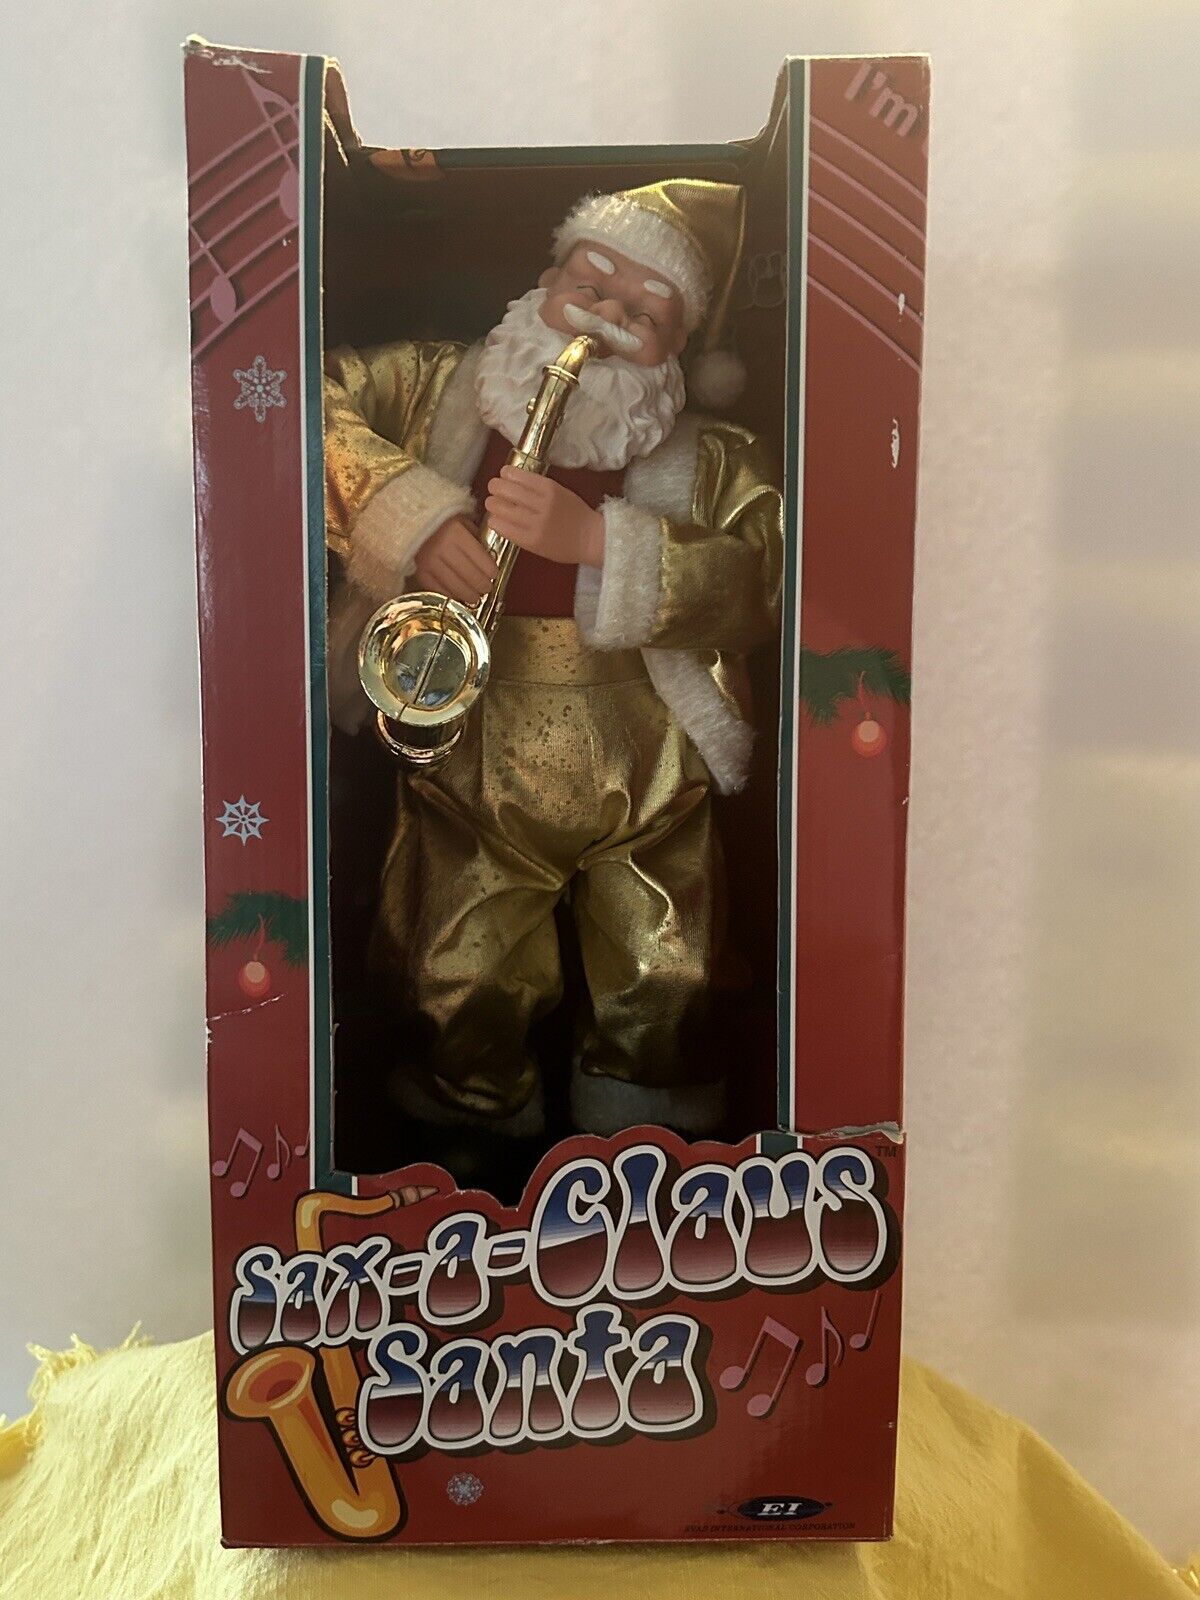 VTG Jazzy Santa “Sax-a-Claus Santa” Gold Metallic Suit Original Box